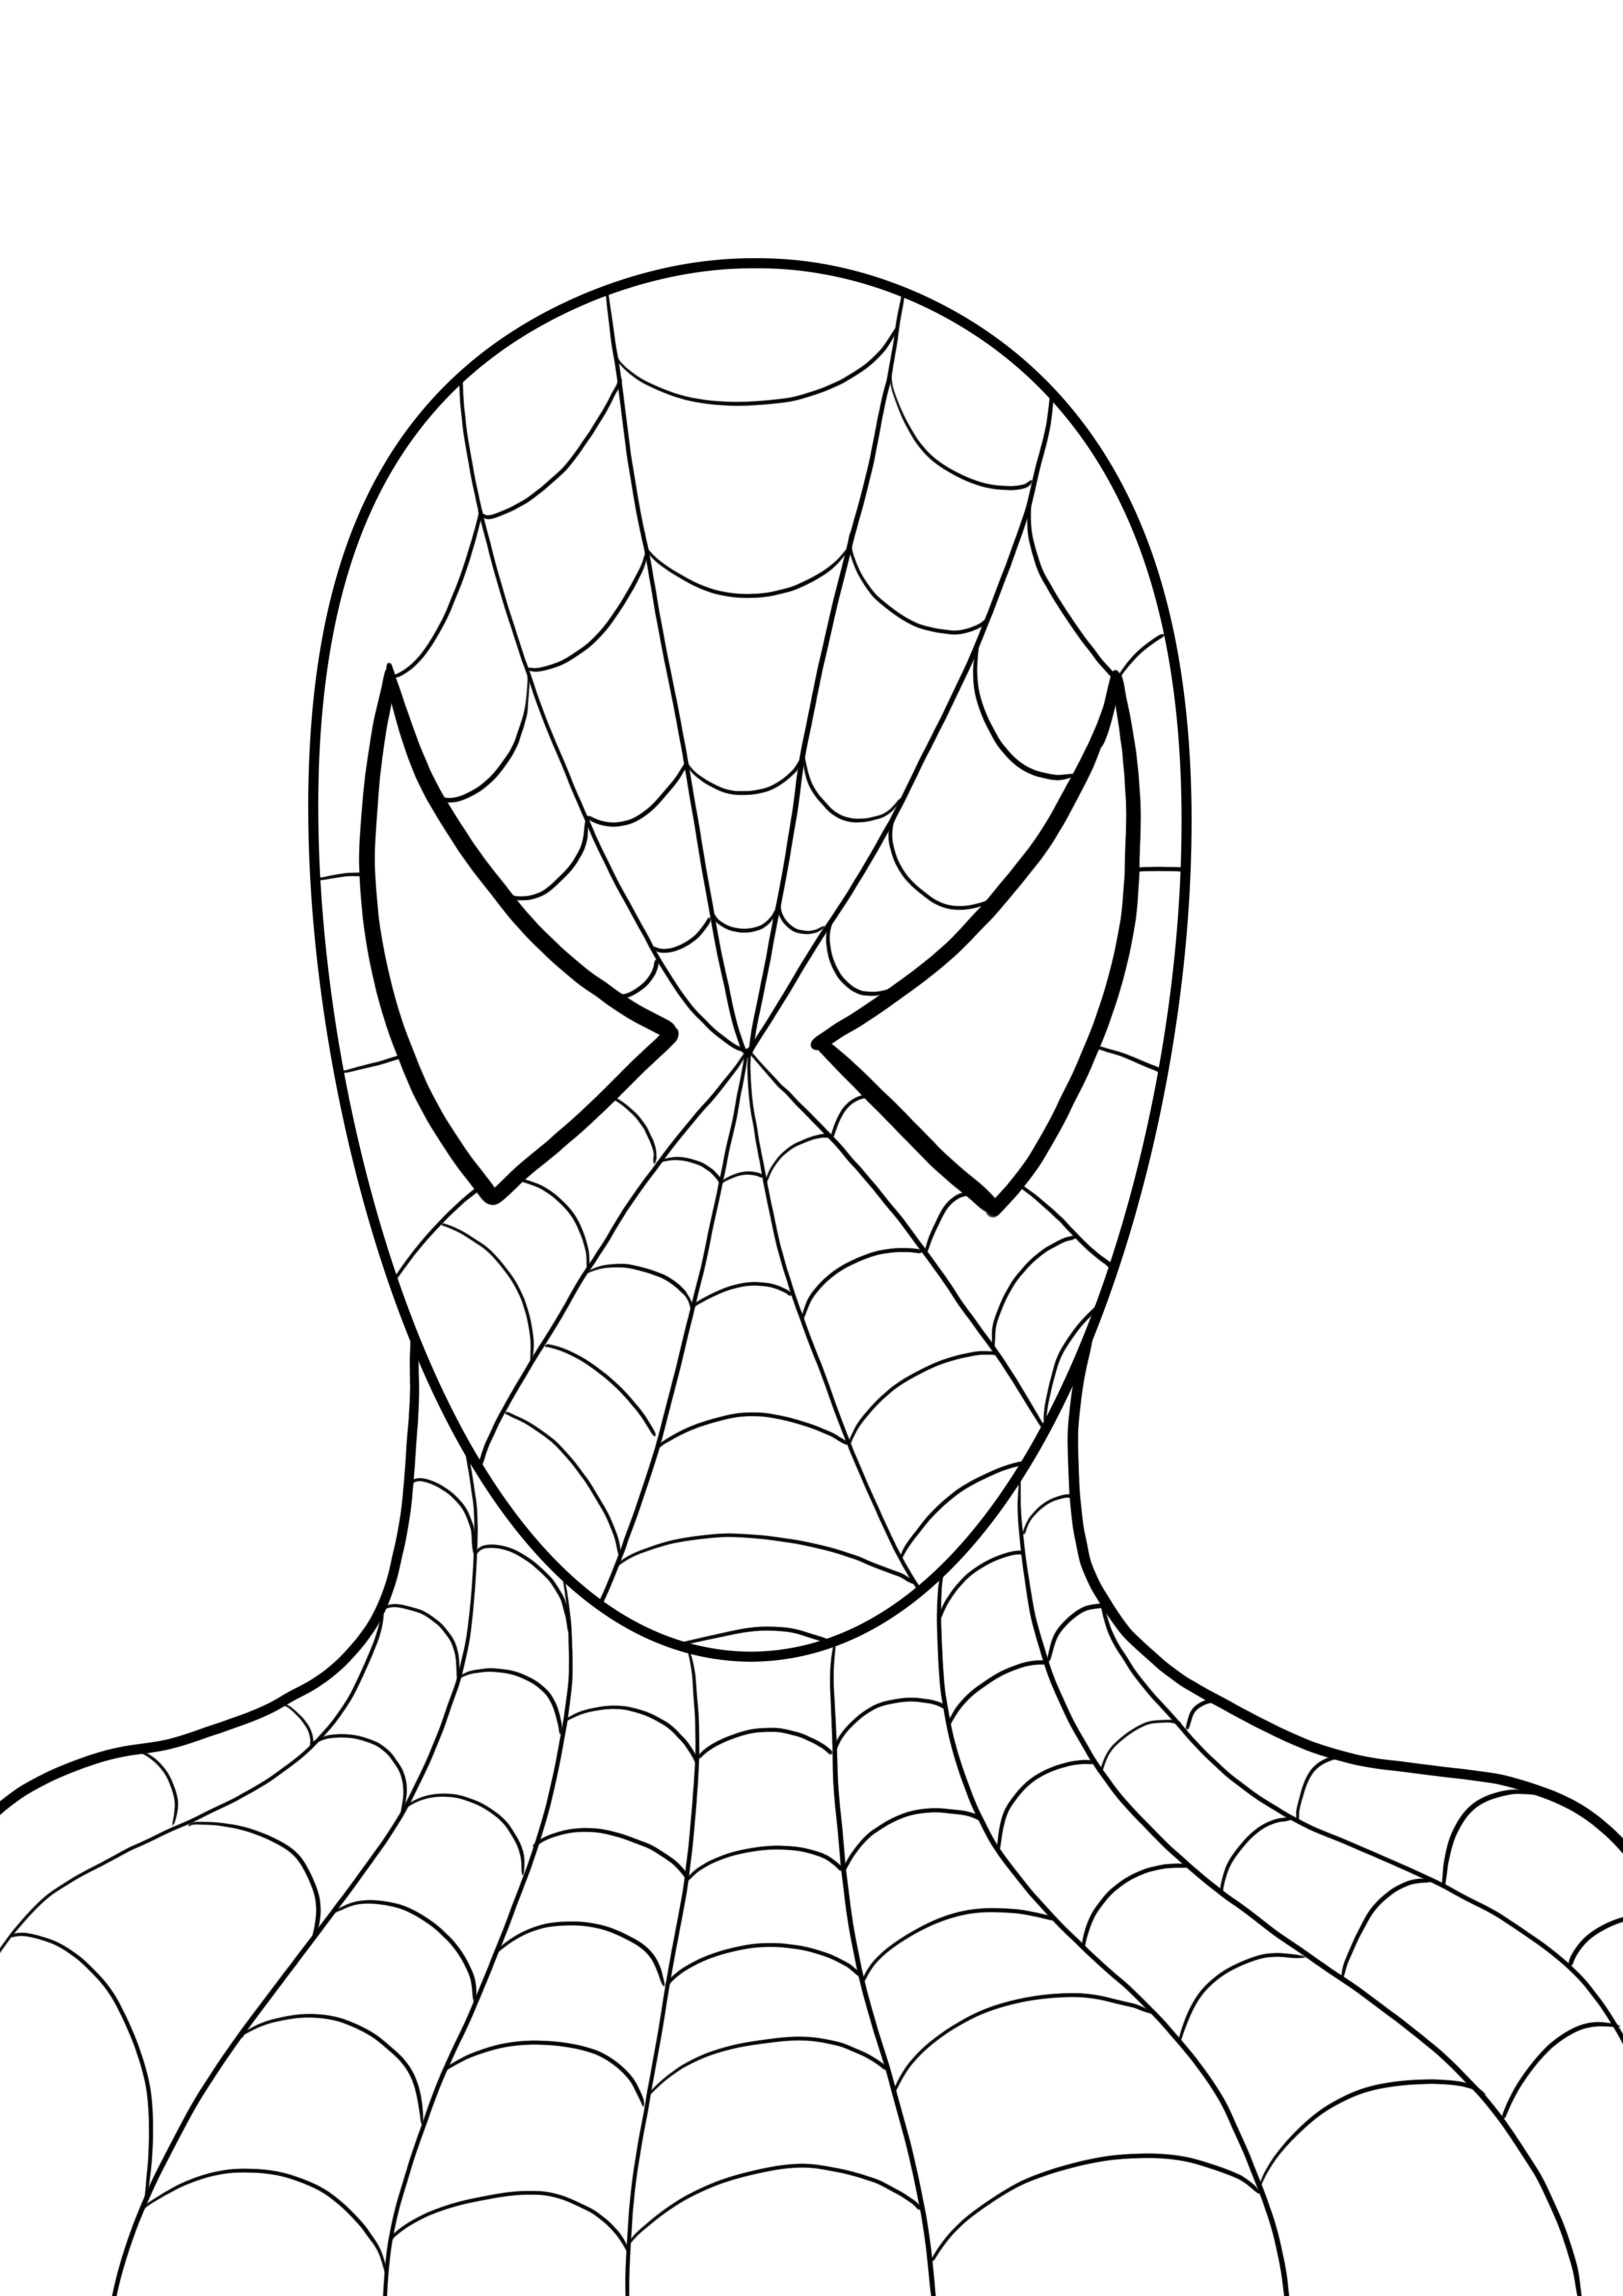 Head of Spiderman download en kleur gratis kleurplaat